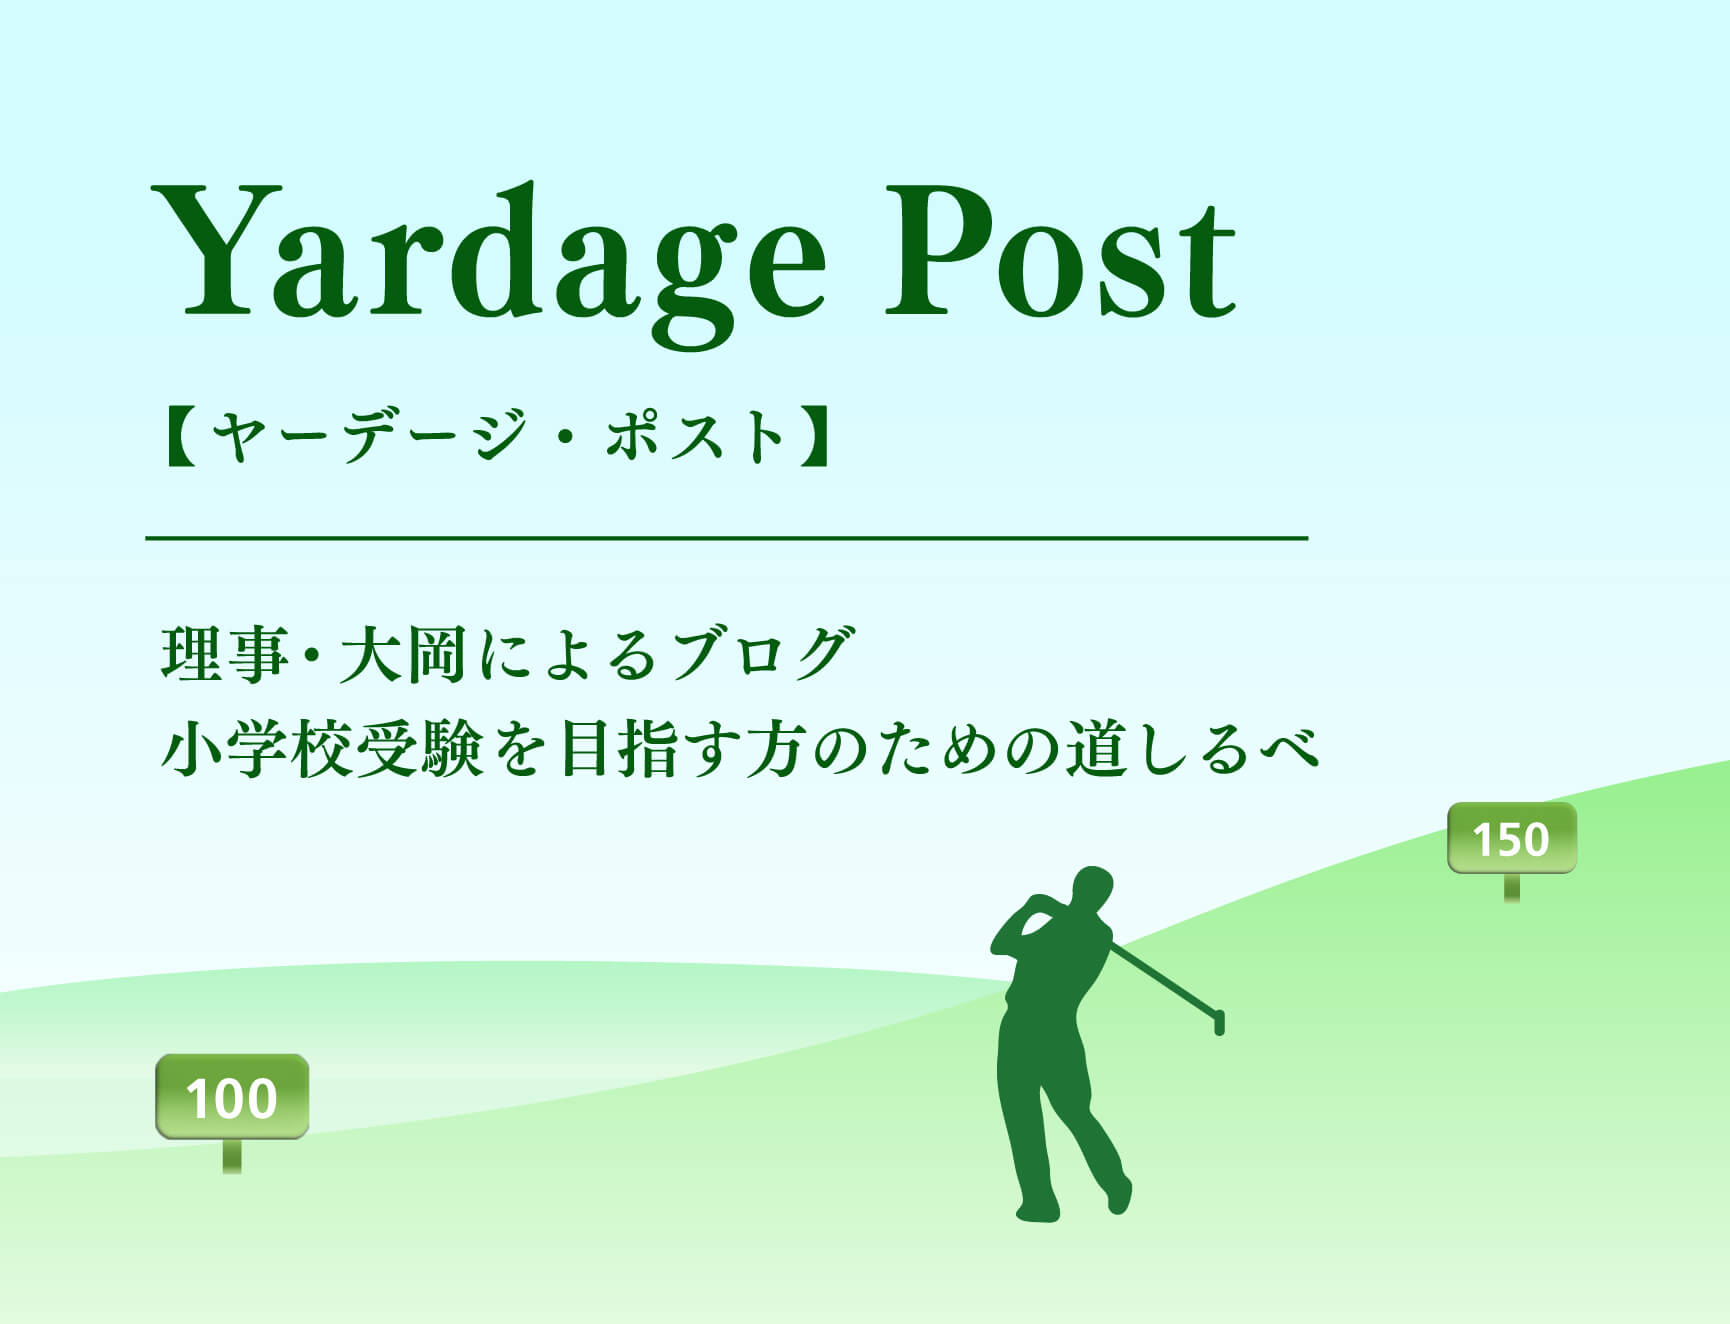 Yardage Post